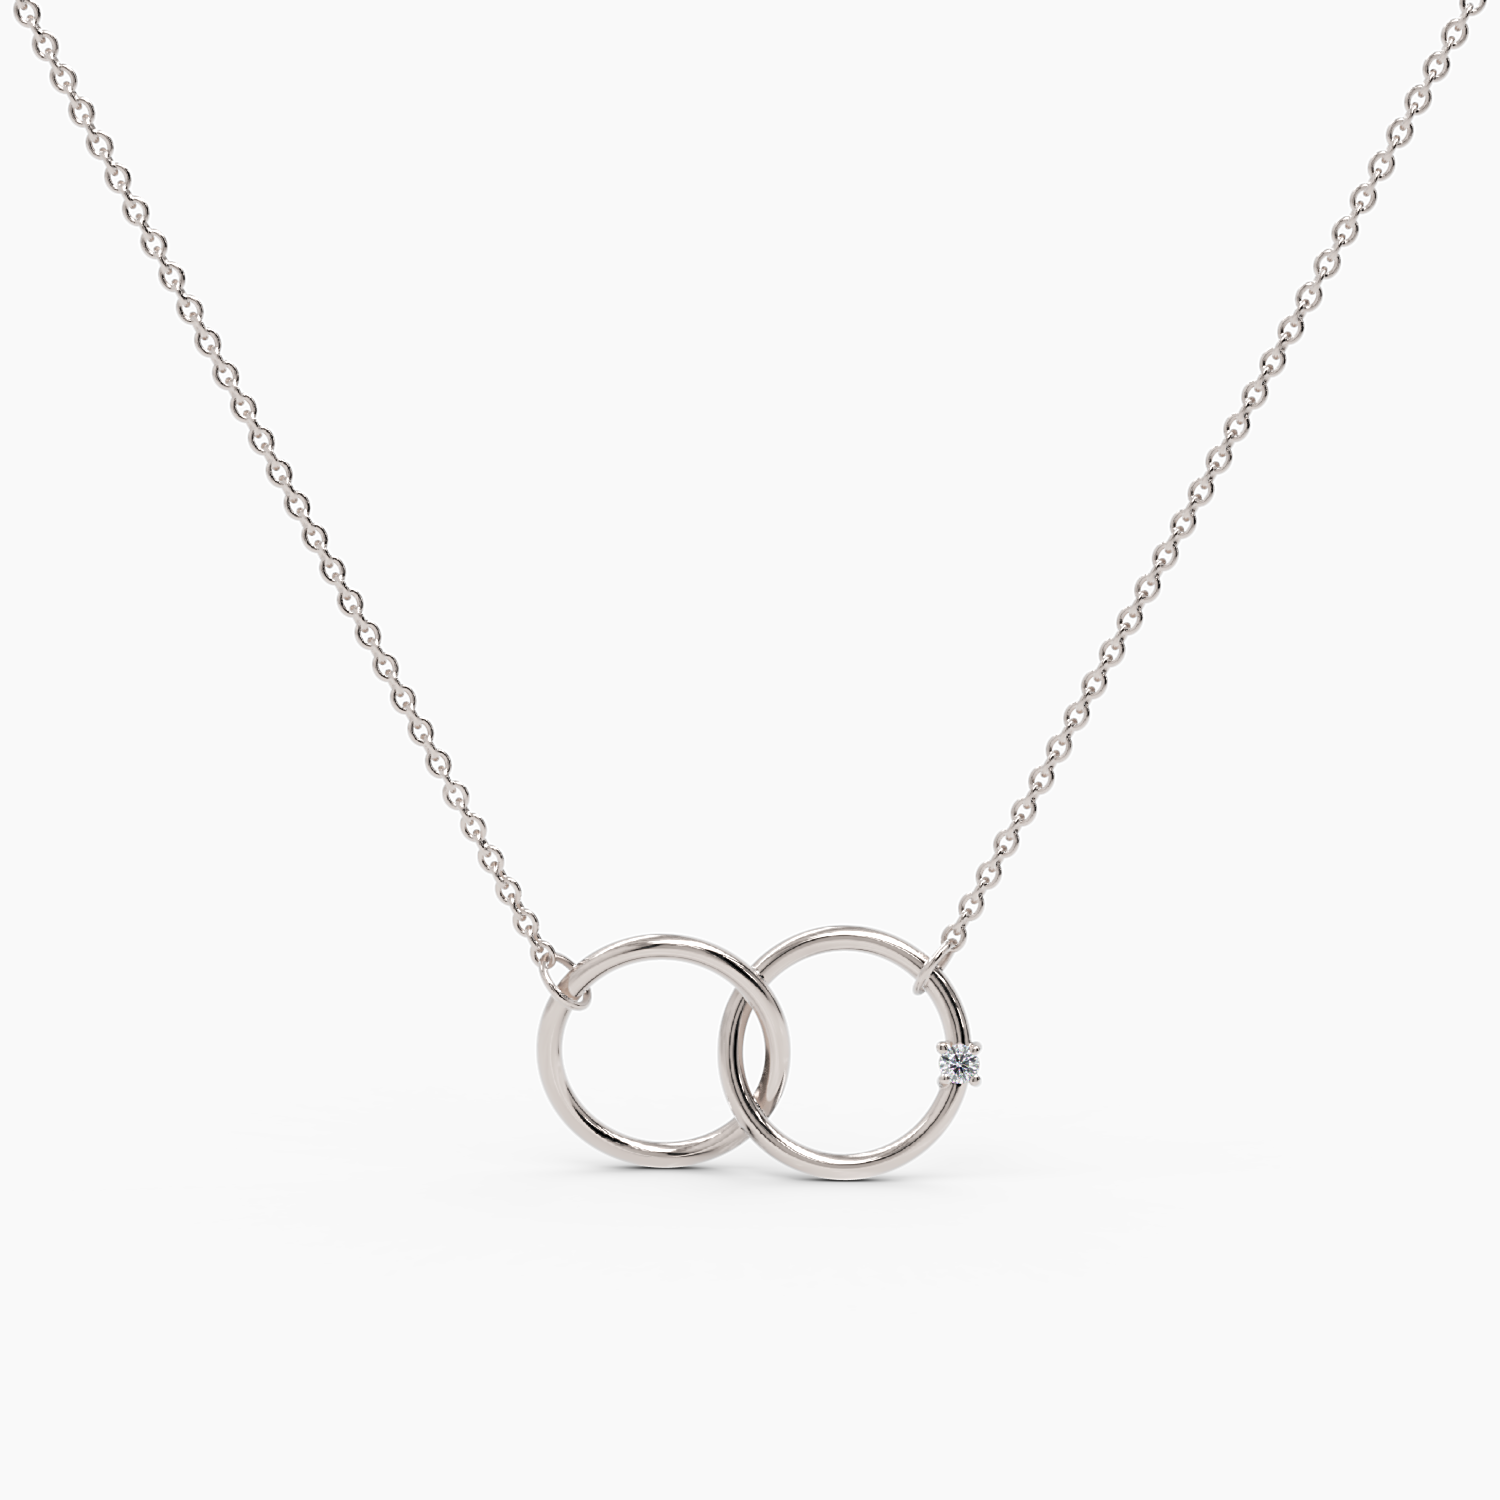 Interlinked Circles Necklace with Tiny Diamond